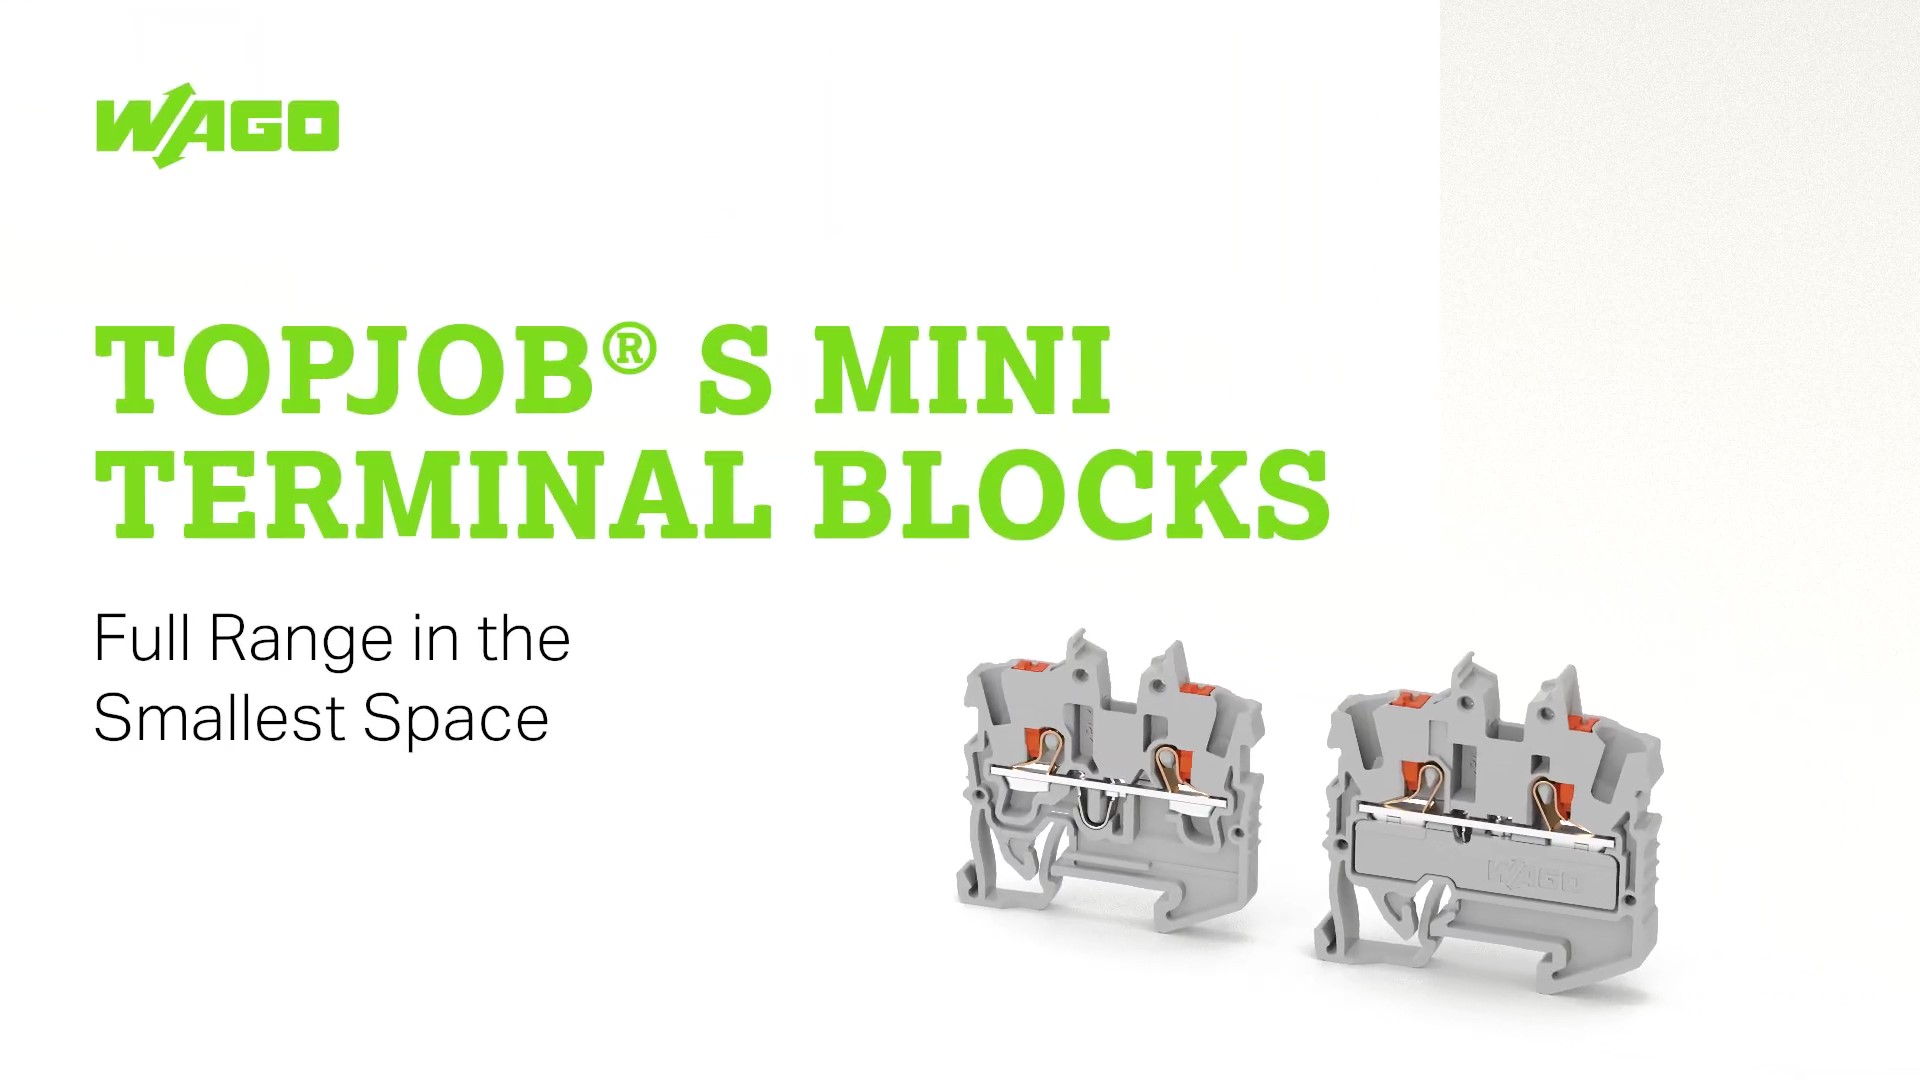 Wago Top Job Mini Terminal Blocks